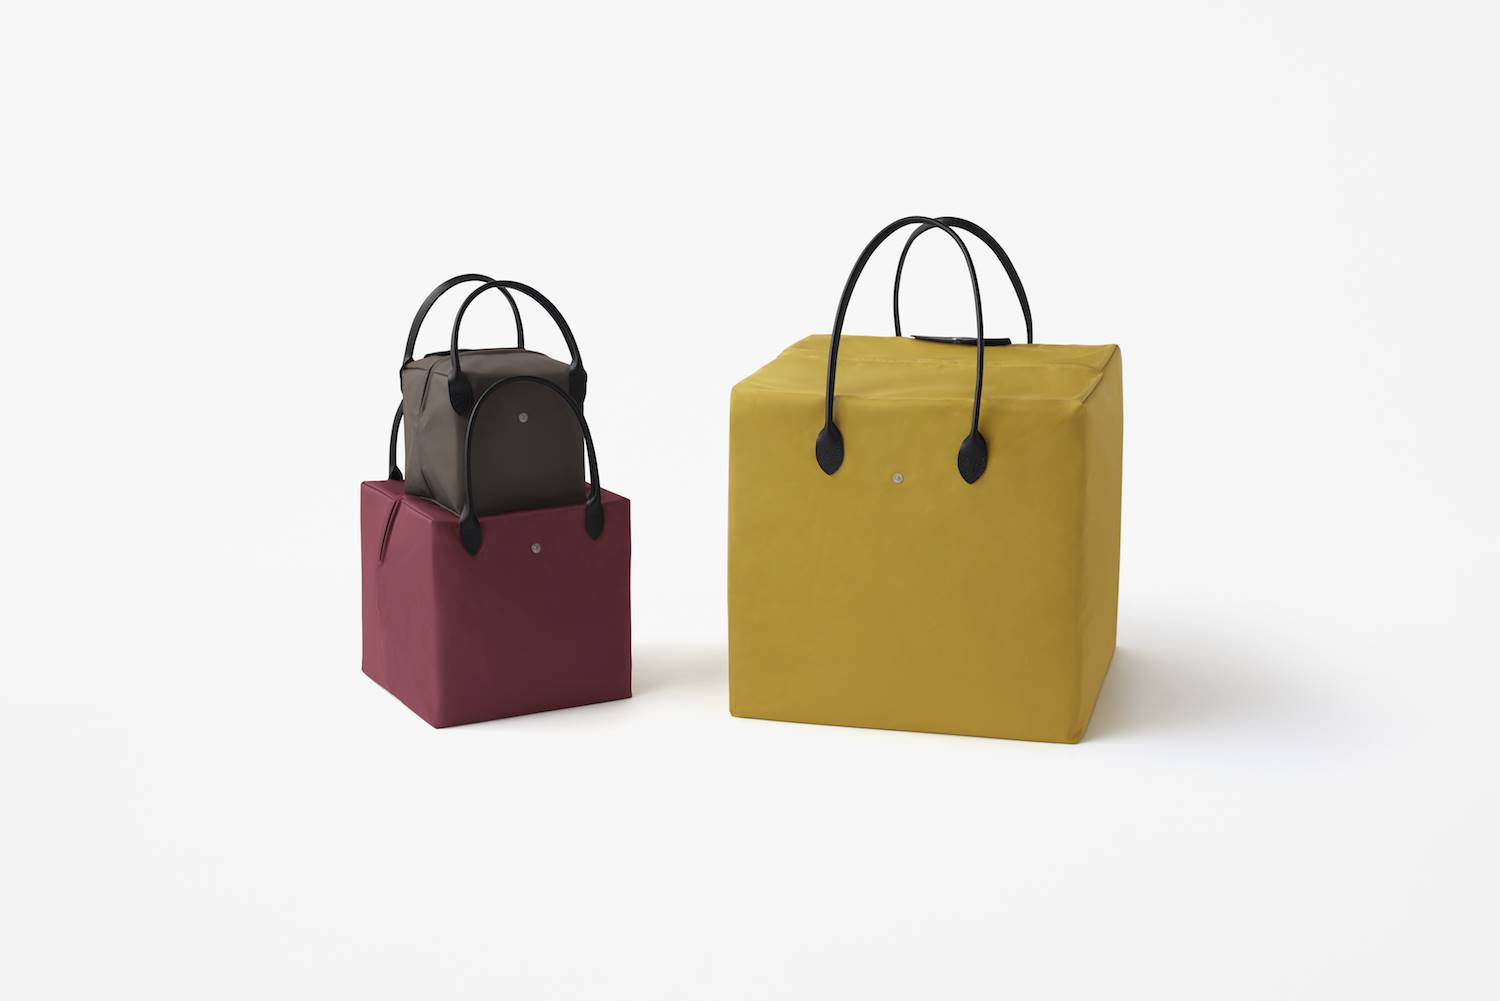 Bolso Katachi diseñado por Nendo para Longchamp 5. El modelo en forma de cubo puede usarse como caja de almacenamiento flexible. 